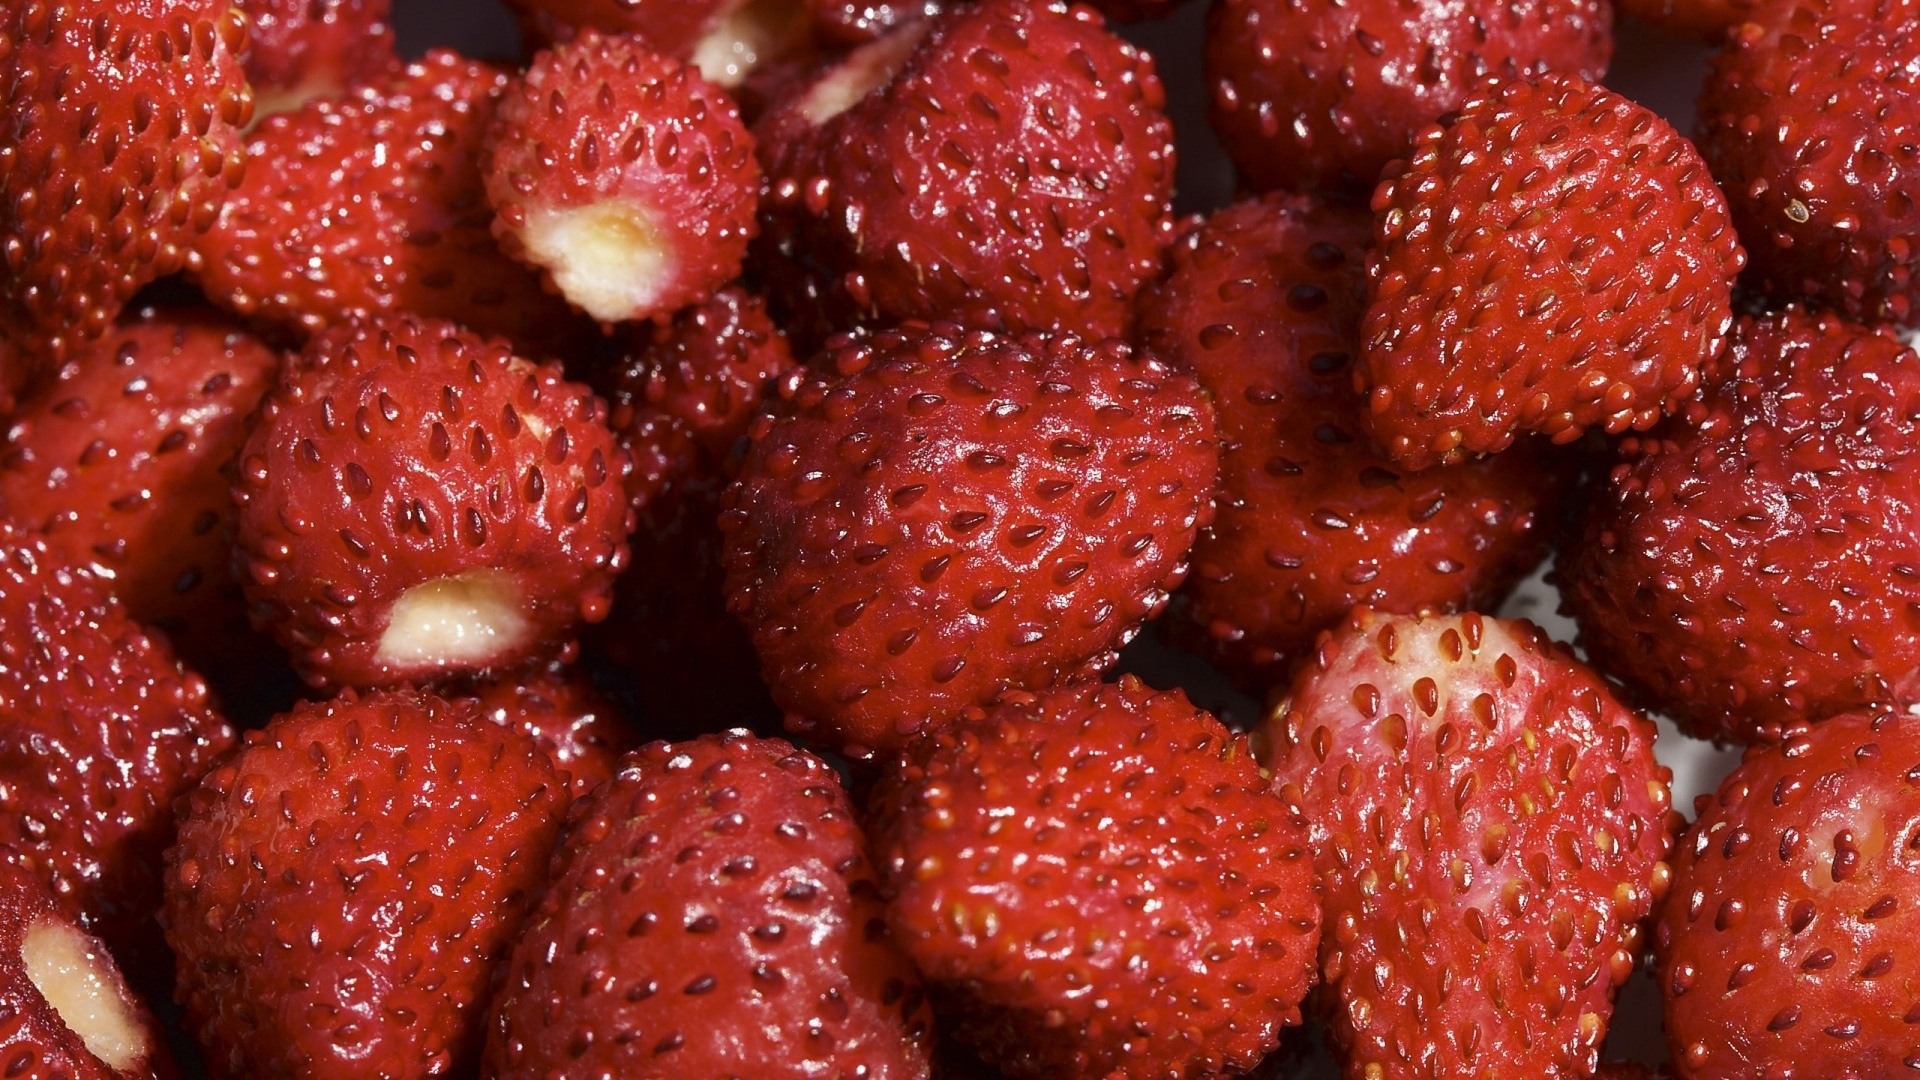 Strawberries for 1920 x 1080 HDTV 1080p resolution